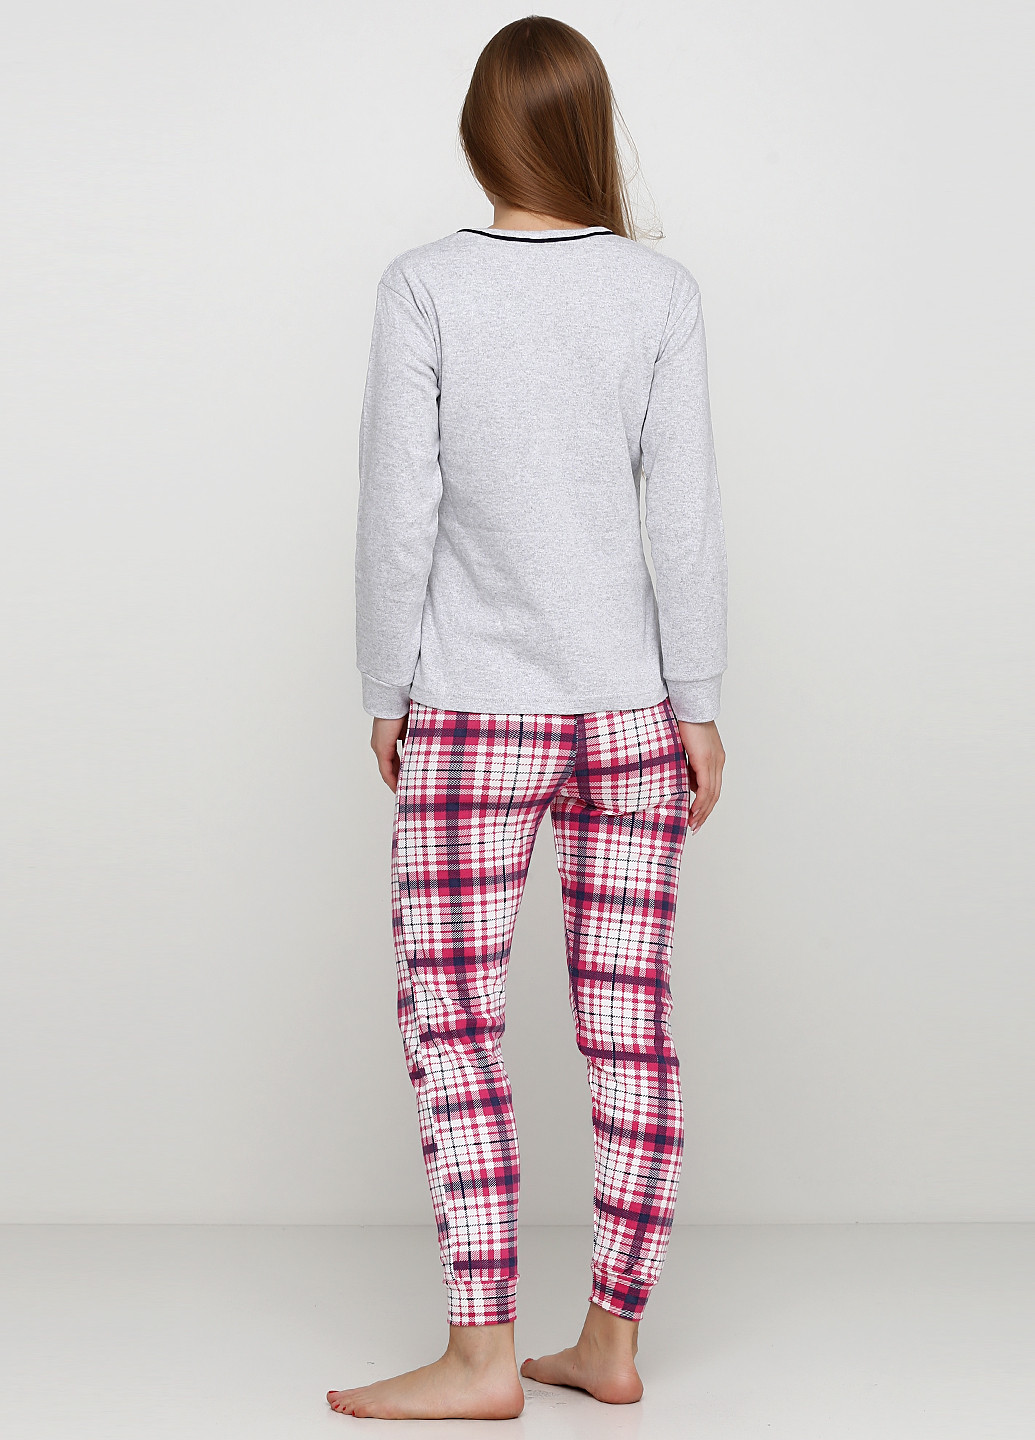 Светло-серая всесезон пижама (свитшот, брюки) свитшот + брюки Fawn